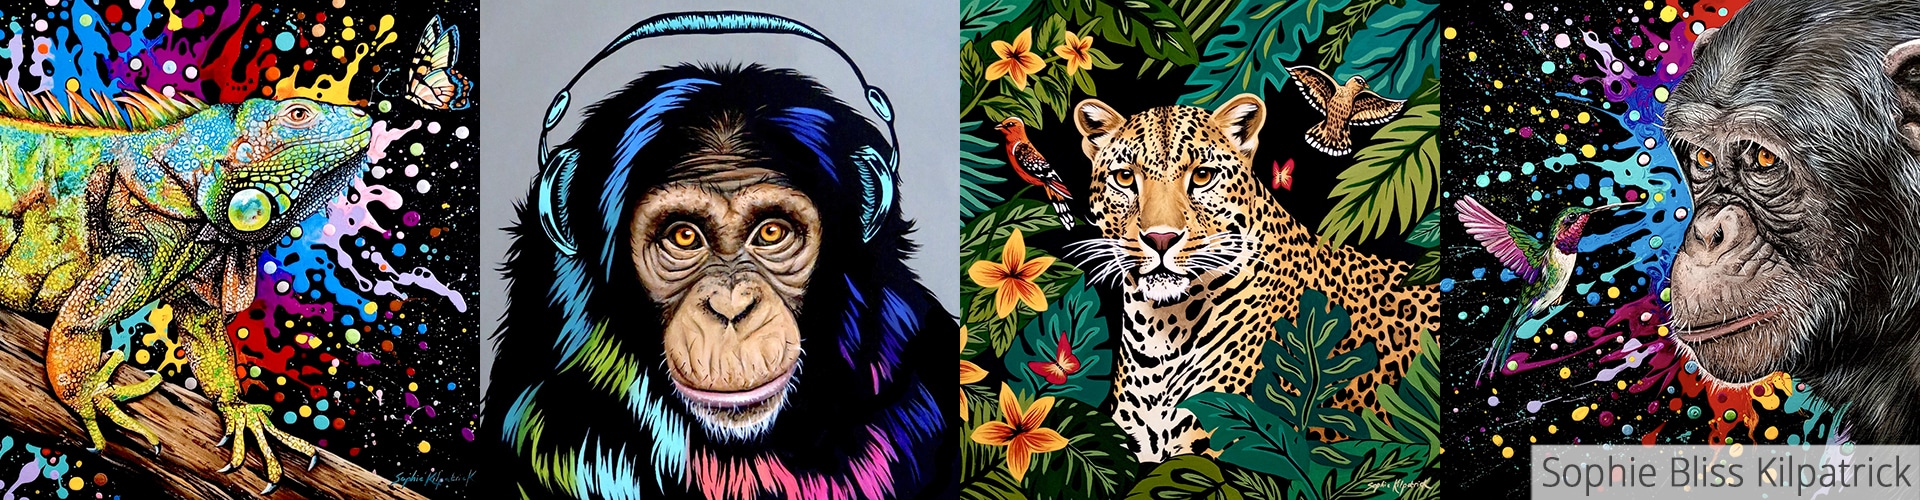 Sophie Bliss Kilpatrick wildlife artist art licensing various animal paintings home page banner for art licensing